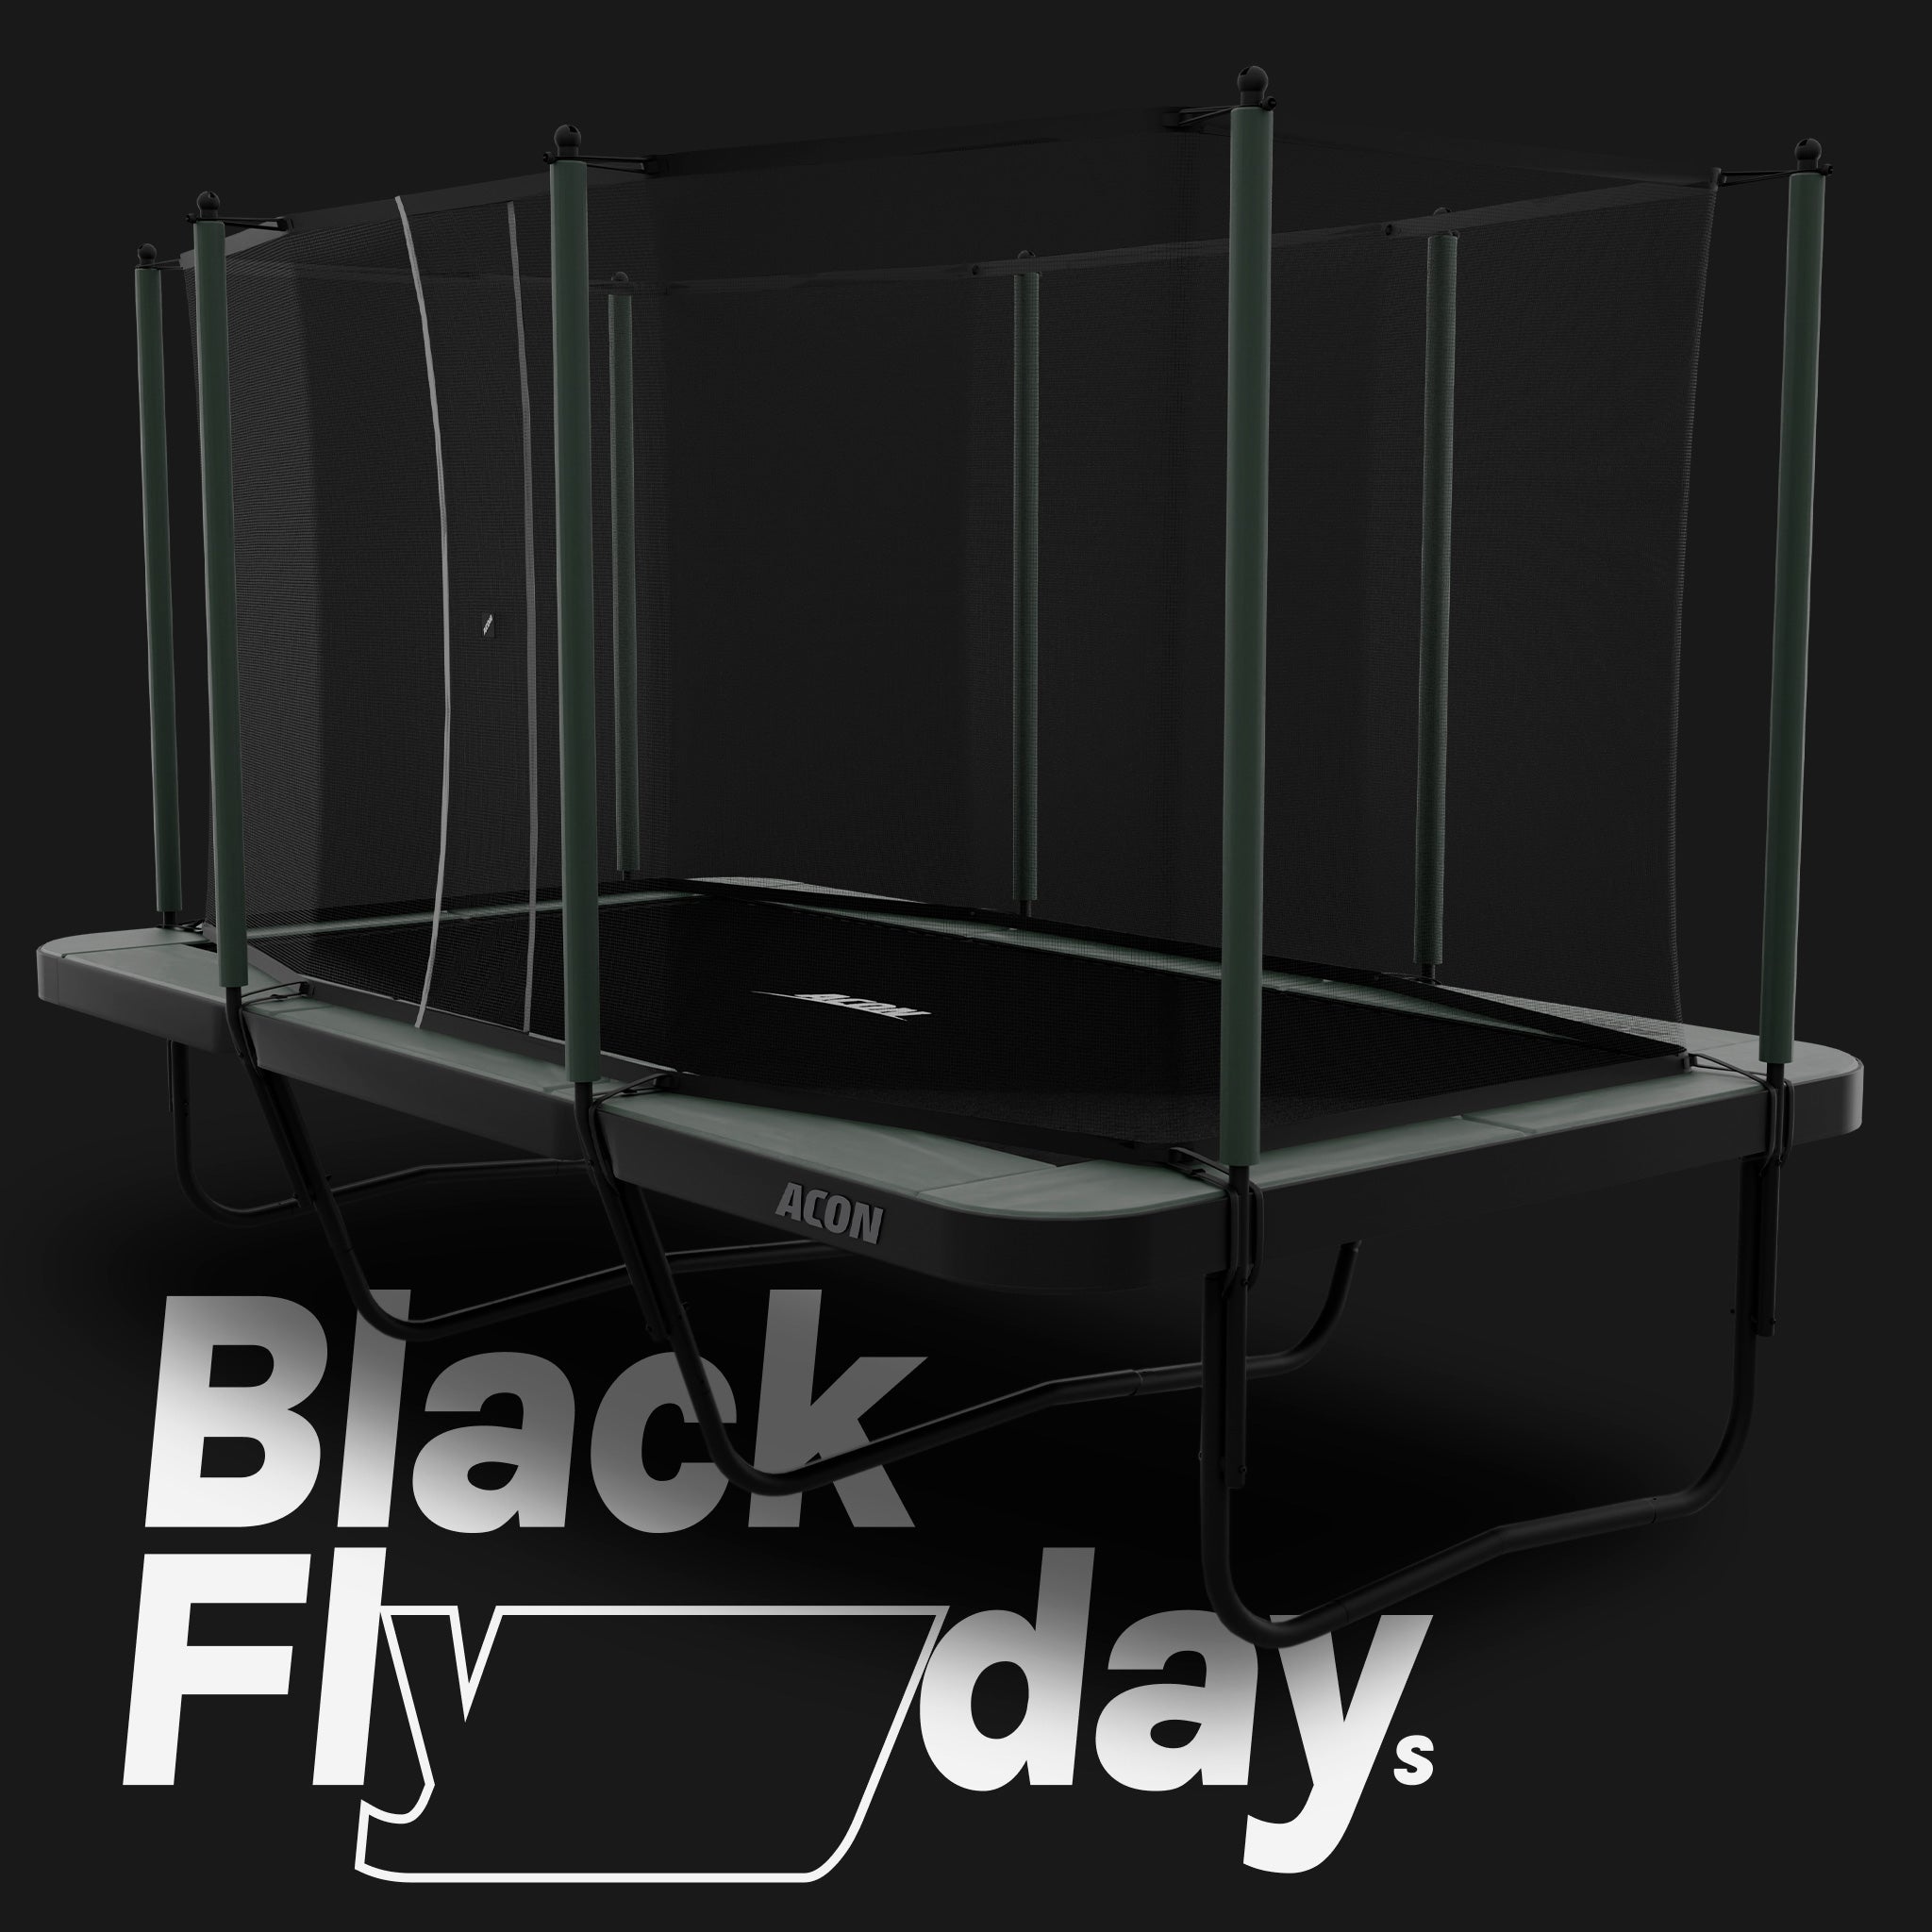 Black Flydays - Acon 16 Sport HD rectangular trampoline with Safety Net.